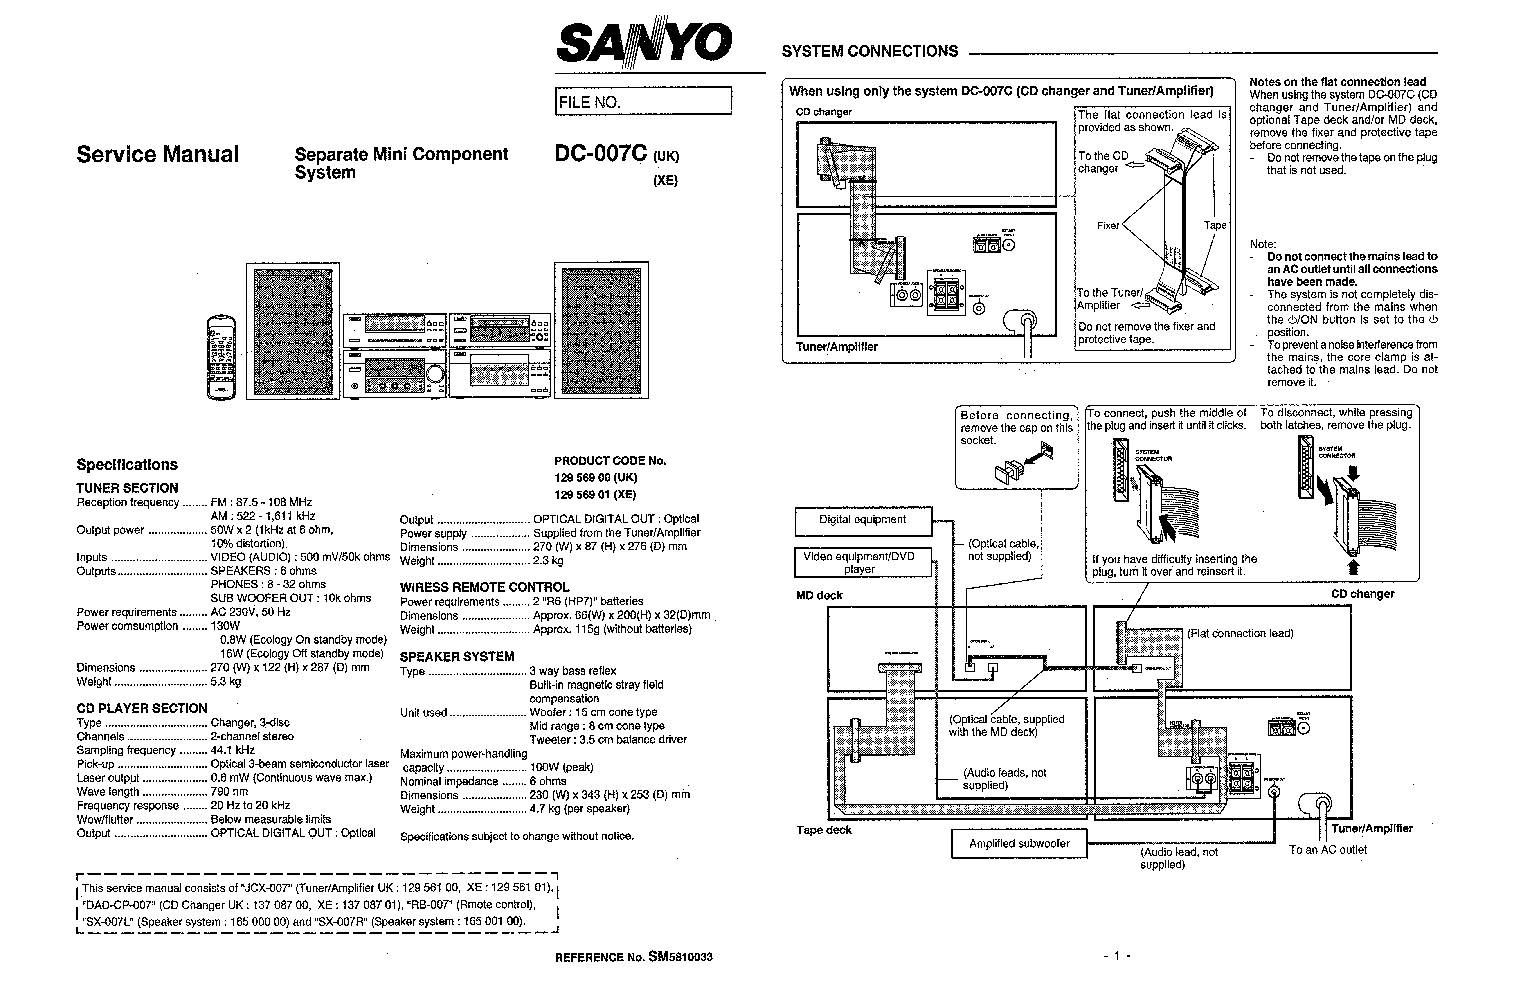 Sanyo DC-007C